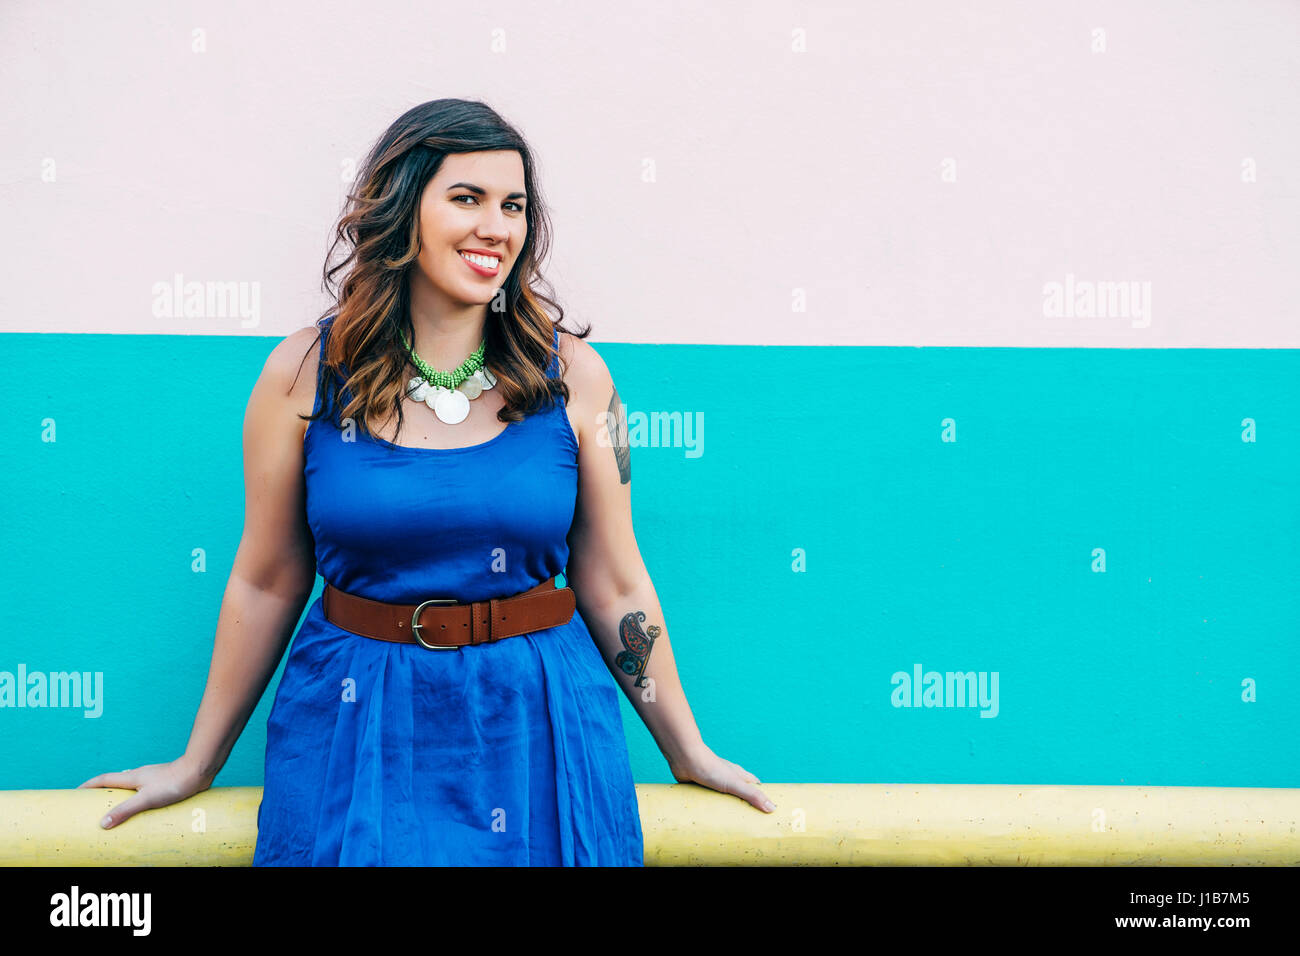 Portrait of smiling Mixed Race woman wearing blue dress Stock Photo